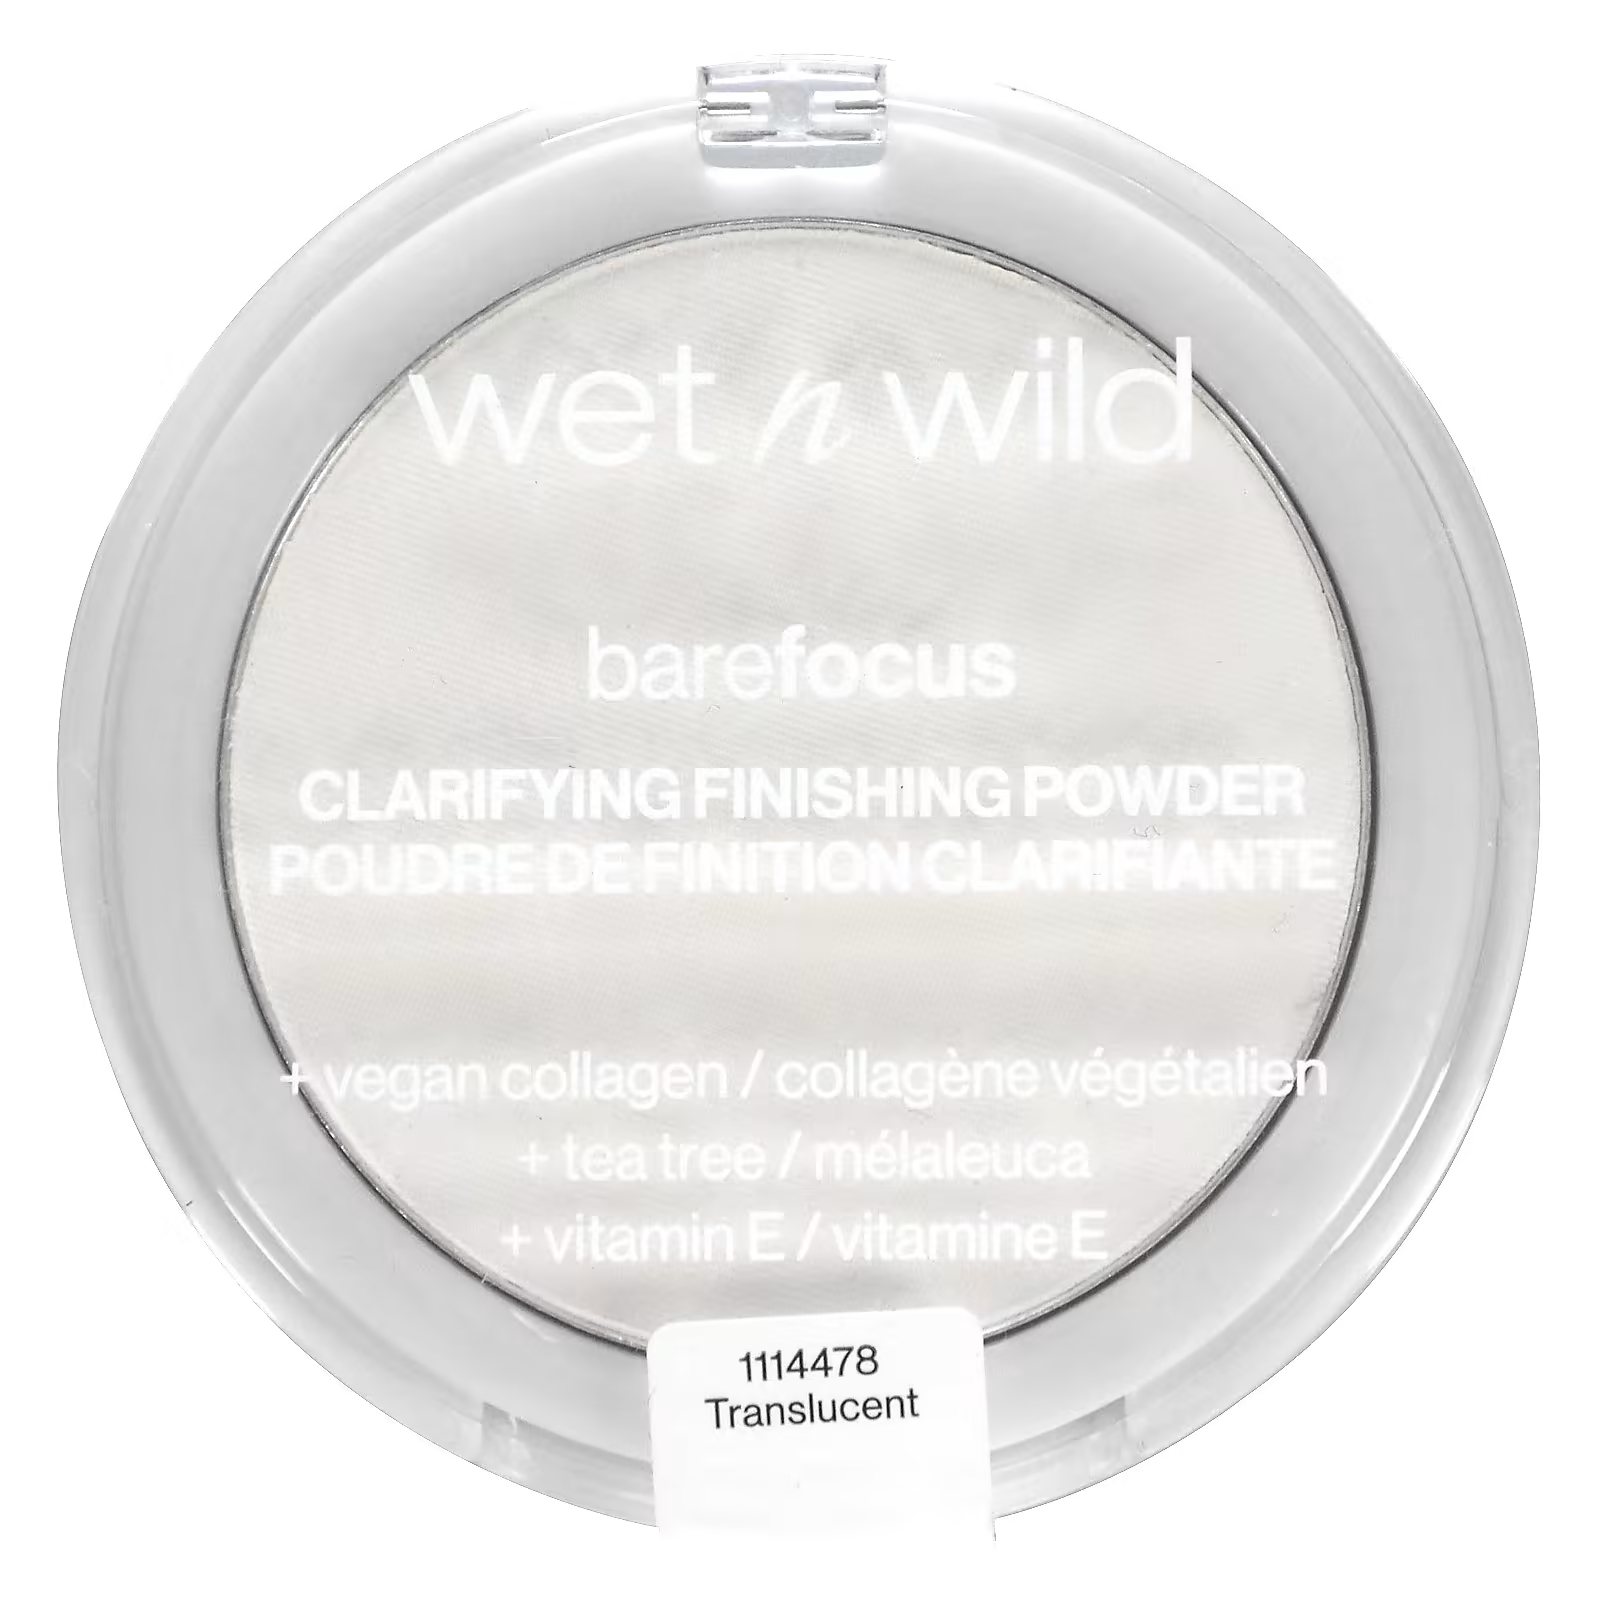 Wet n Wild Barefocus Clarifying Finishing Powder Translucent 0,27 унции (7,8 г)